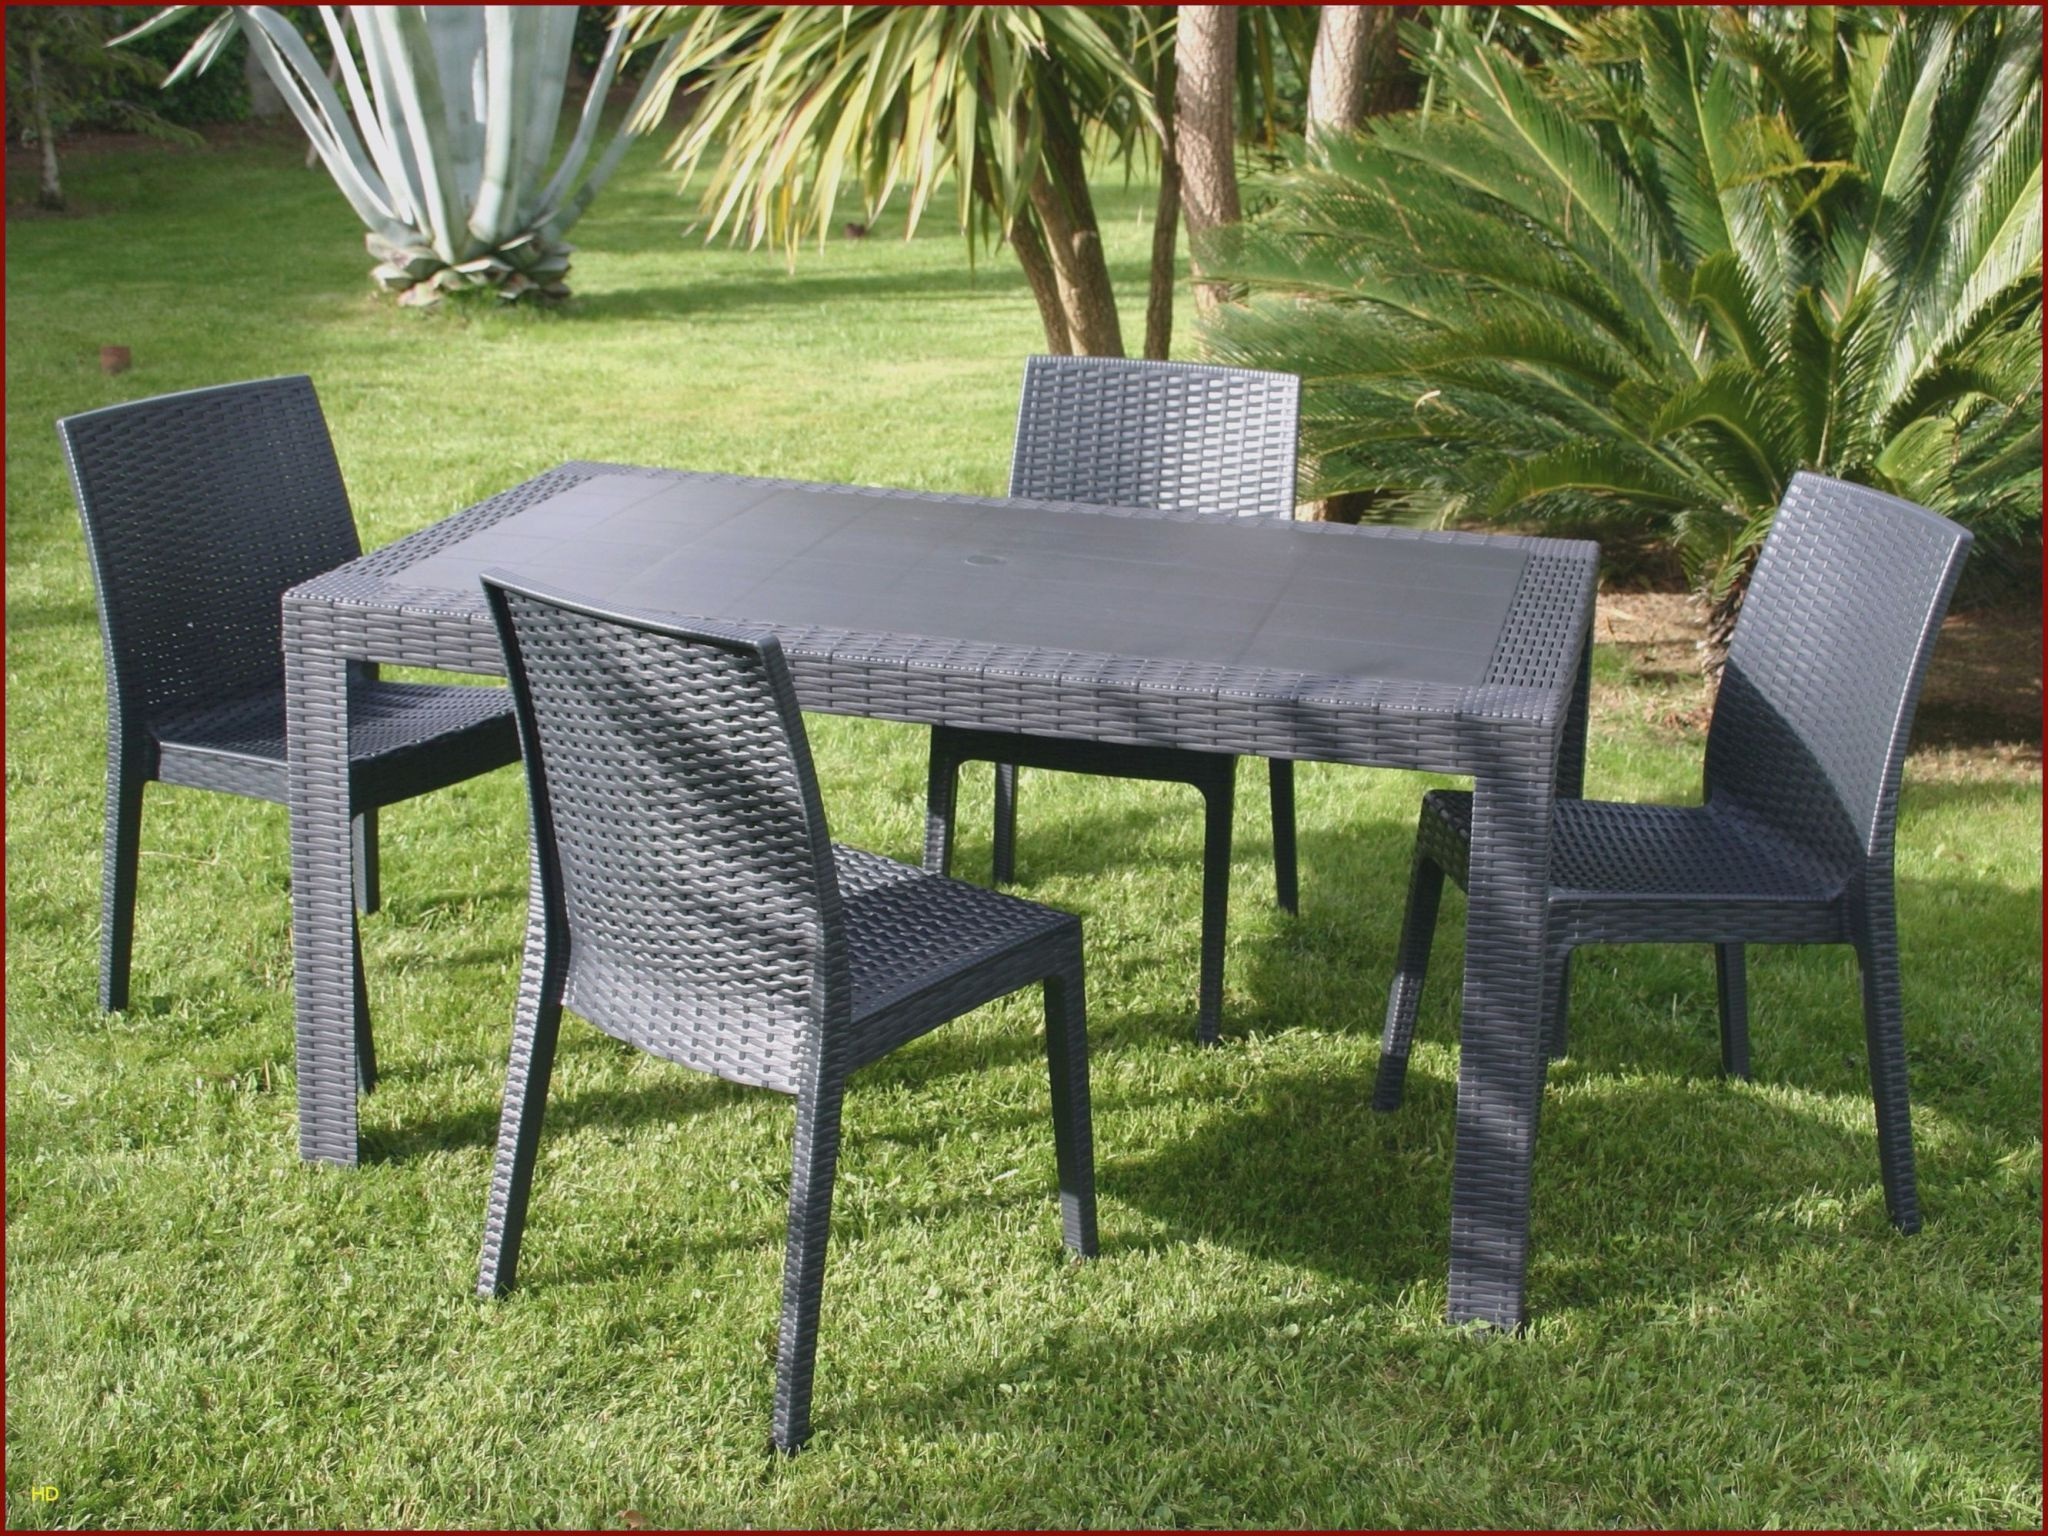 table de jardin avec chaise pas cher chaises luxe chaise ice 0d table jardin resine lovely of table de jardin avec chaise pas cher